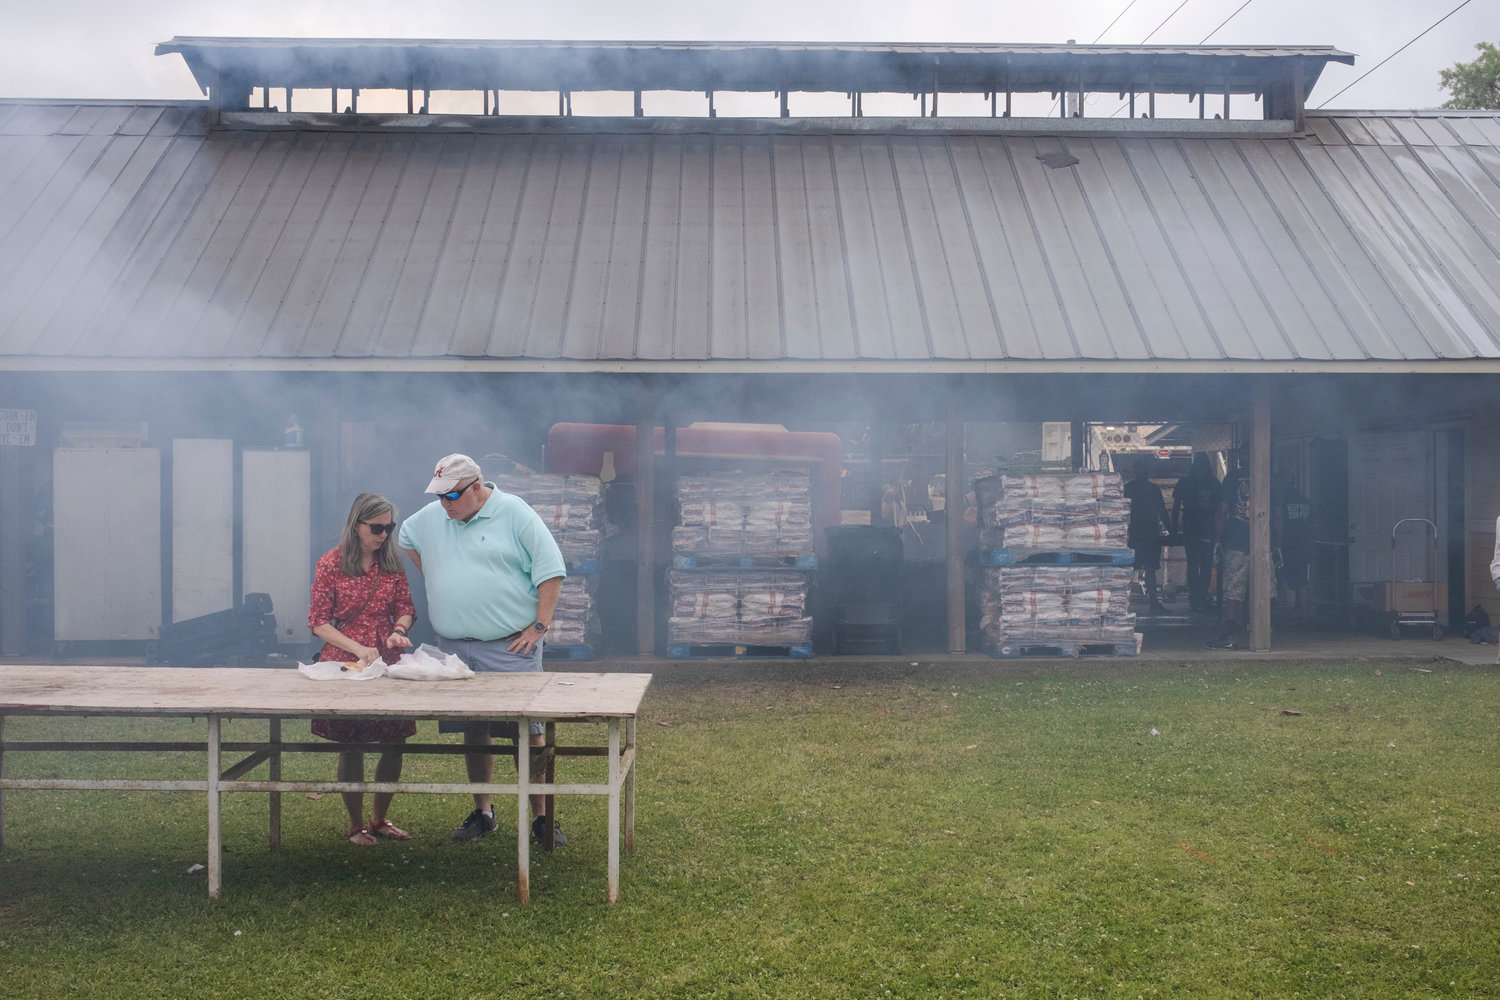 PHOTOS Elberta German Sausage Festival gets smoky Gulf Coast Media